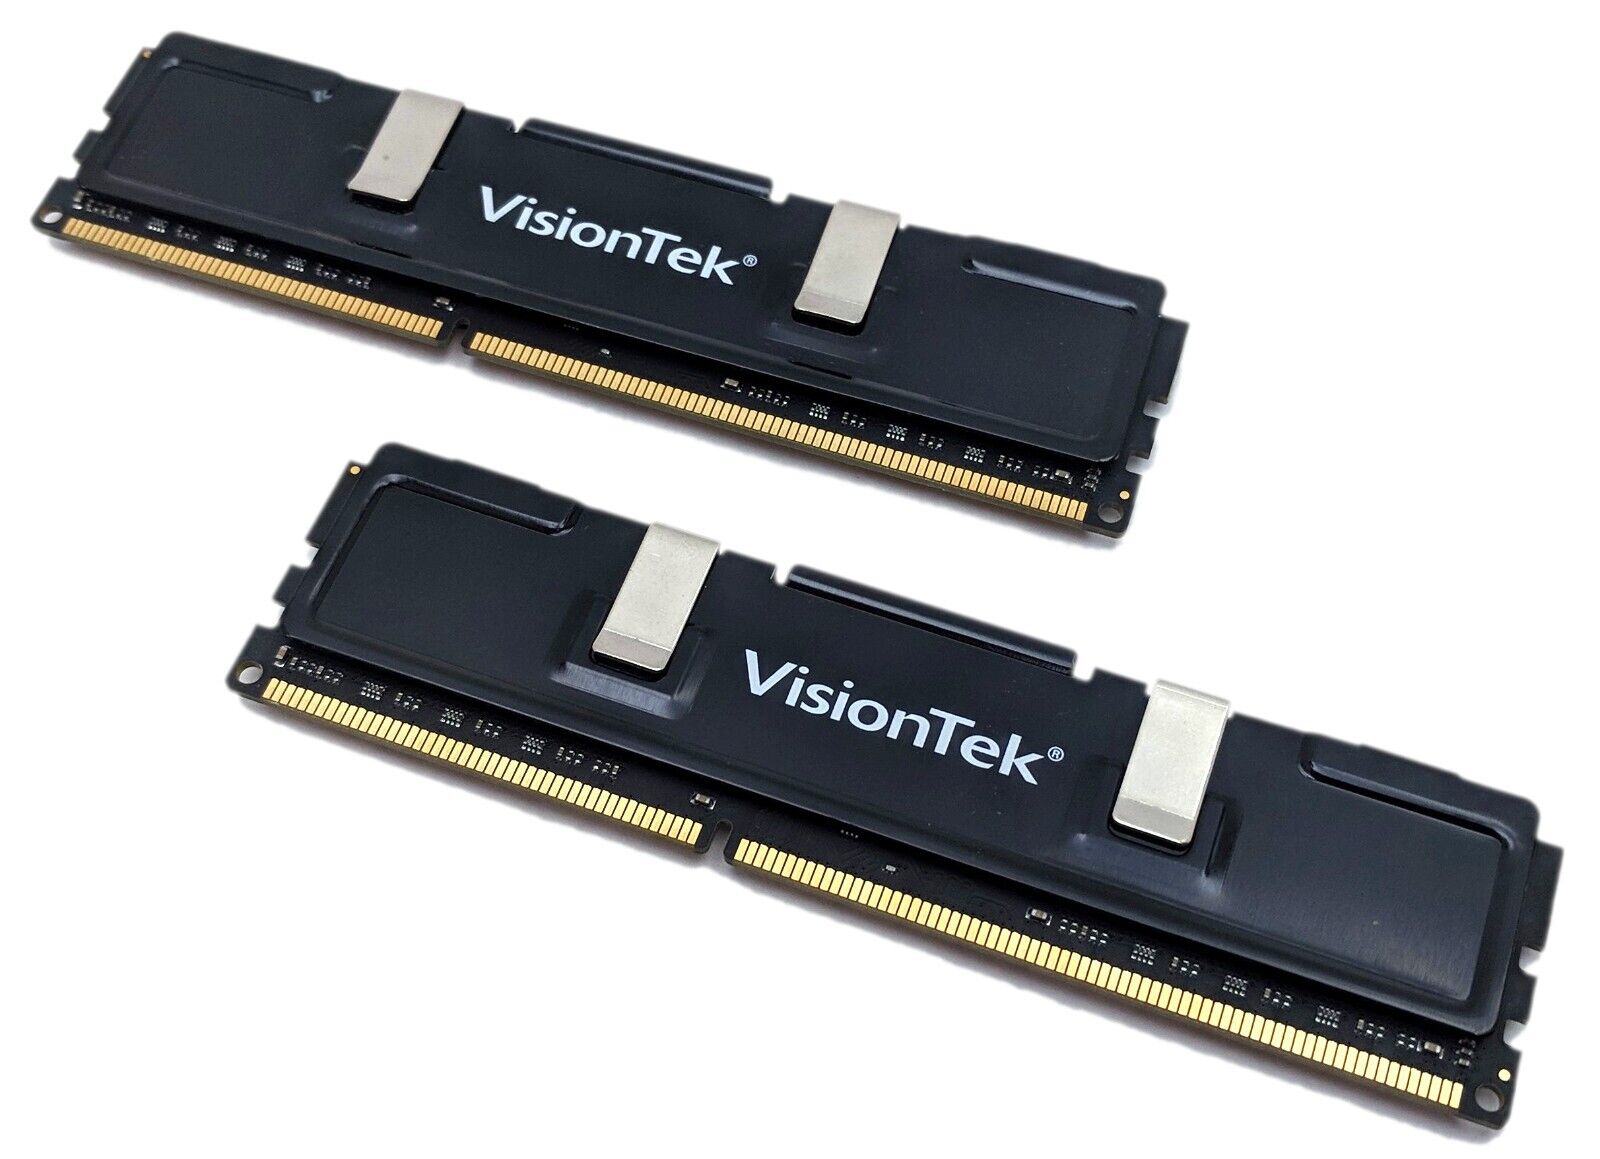 VisionTek 8GB Kit (2x4GB) VTK 4G PC3-10600 CL9 1333 DDR3 SDRAM 1333MHz 401263